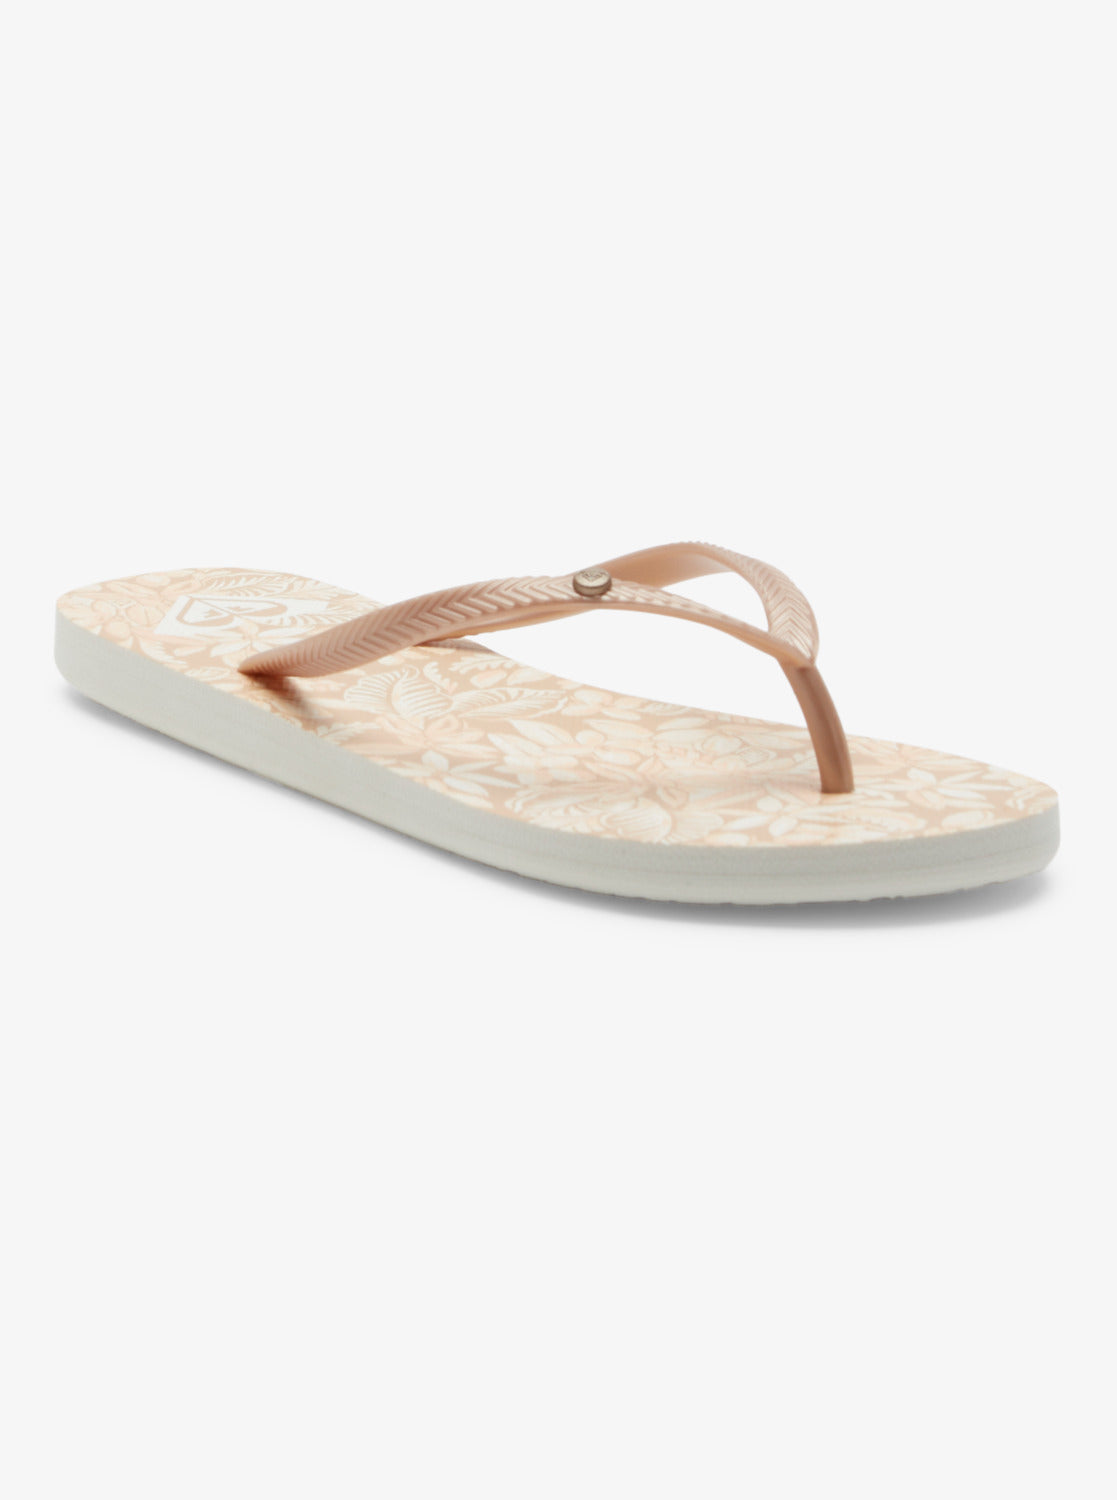 Bermuda Sandals - Peach Cream